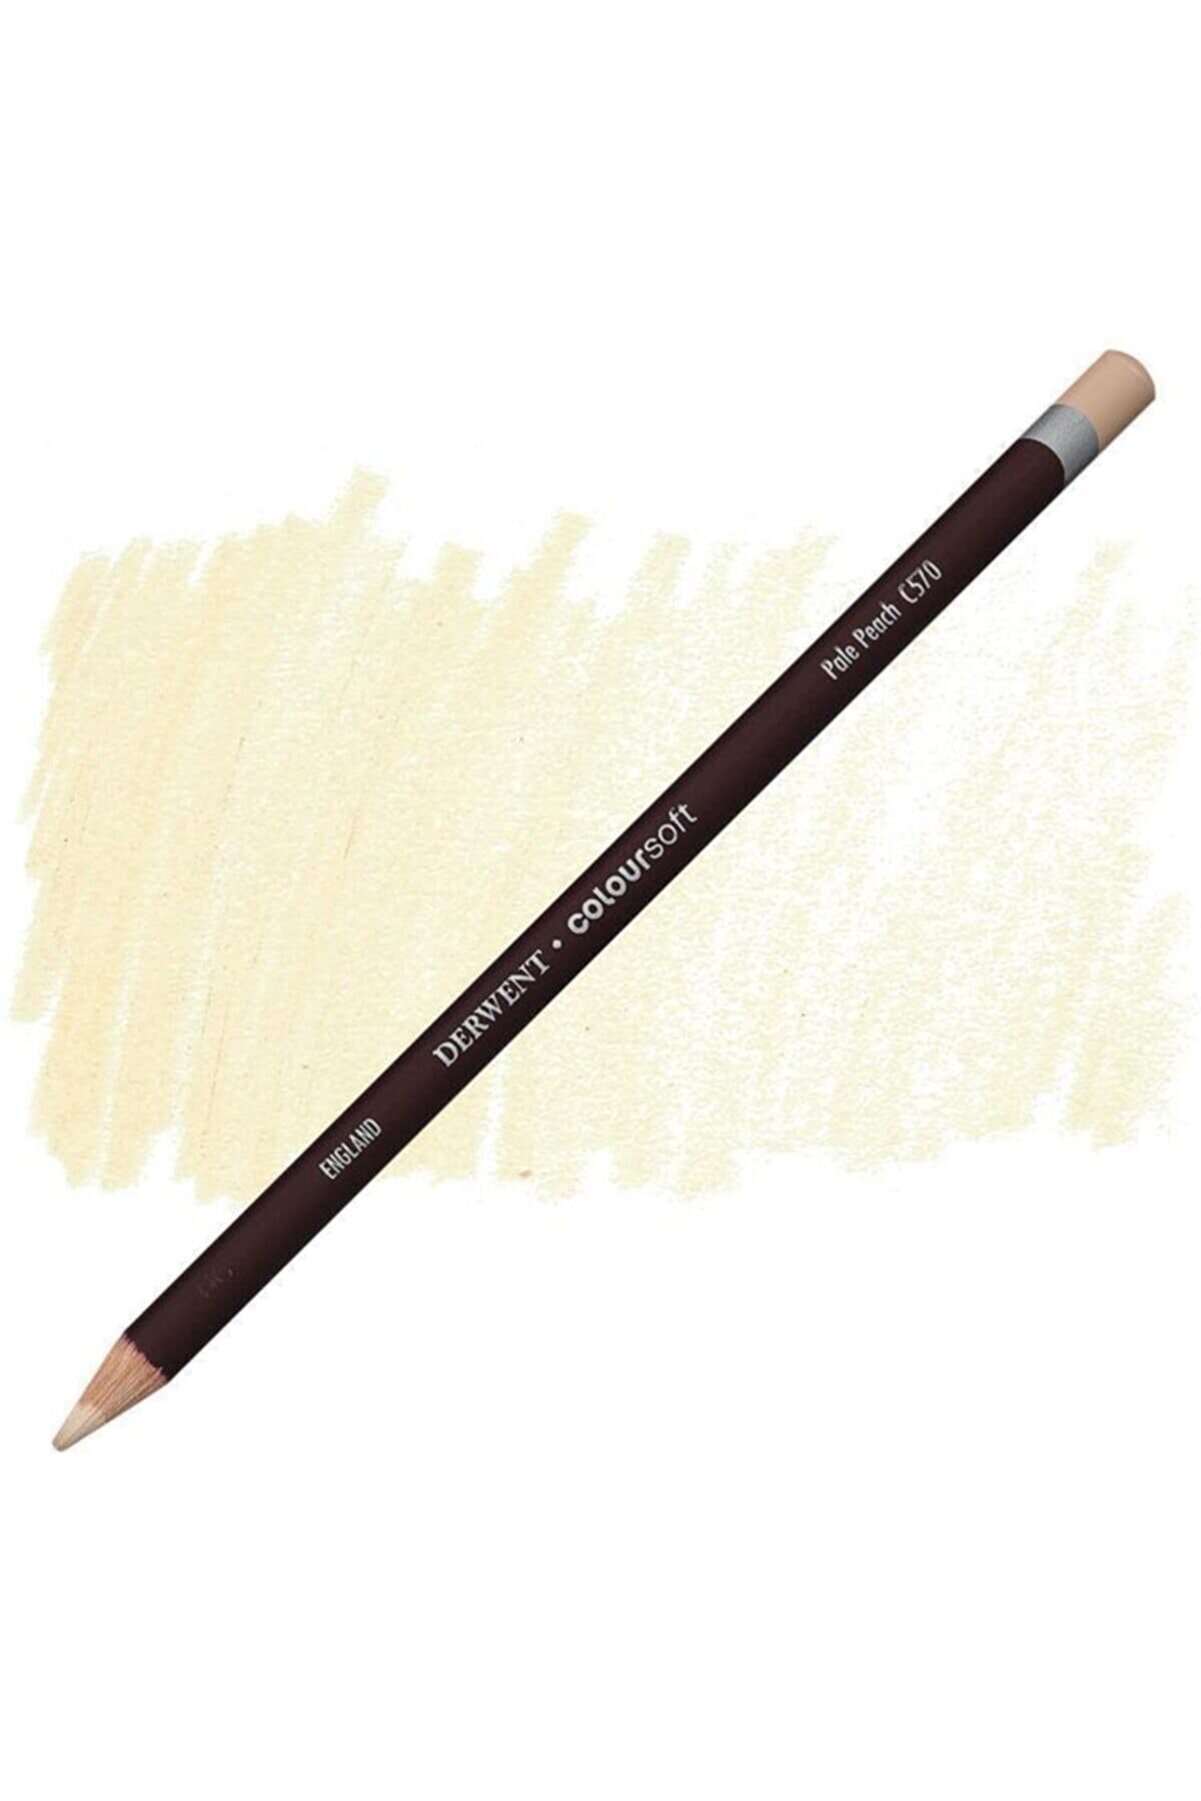 Derwent Coloursoft Pencil Yumuşak Kuruboya Kalemi C570 Pale Peach